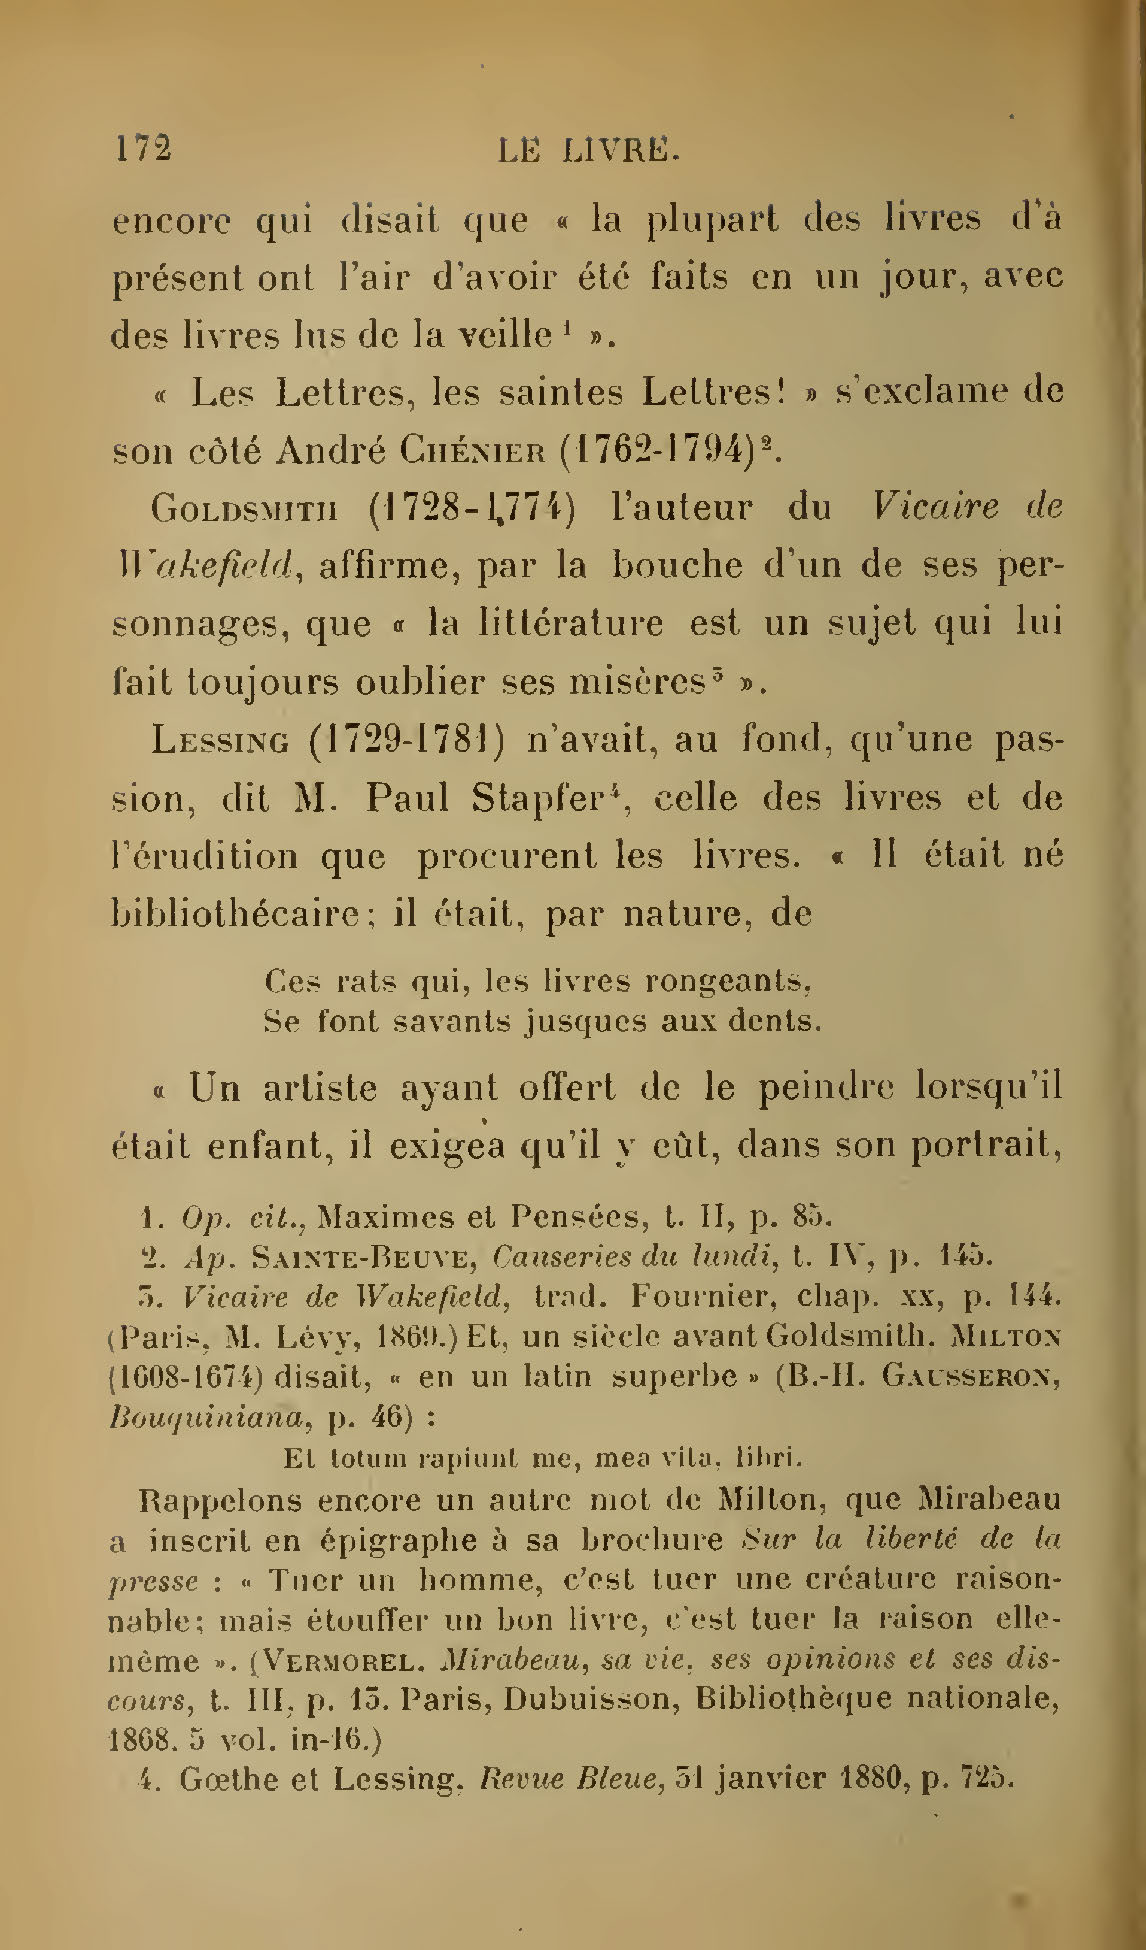 Albert Cim, Le Livre, t. I, p. 172.